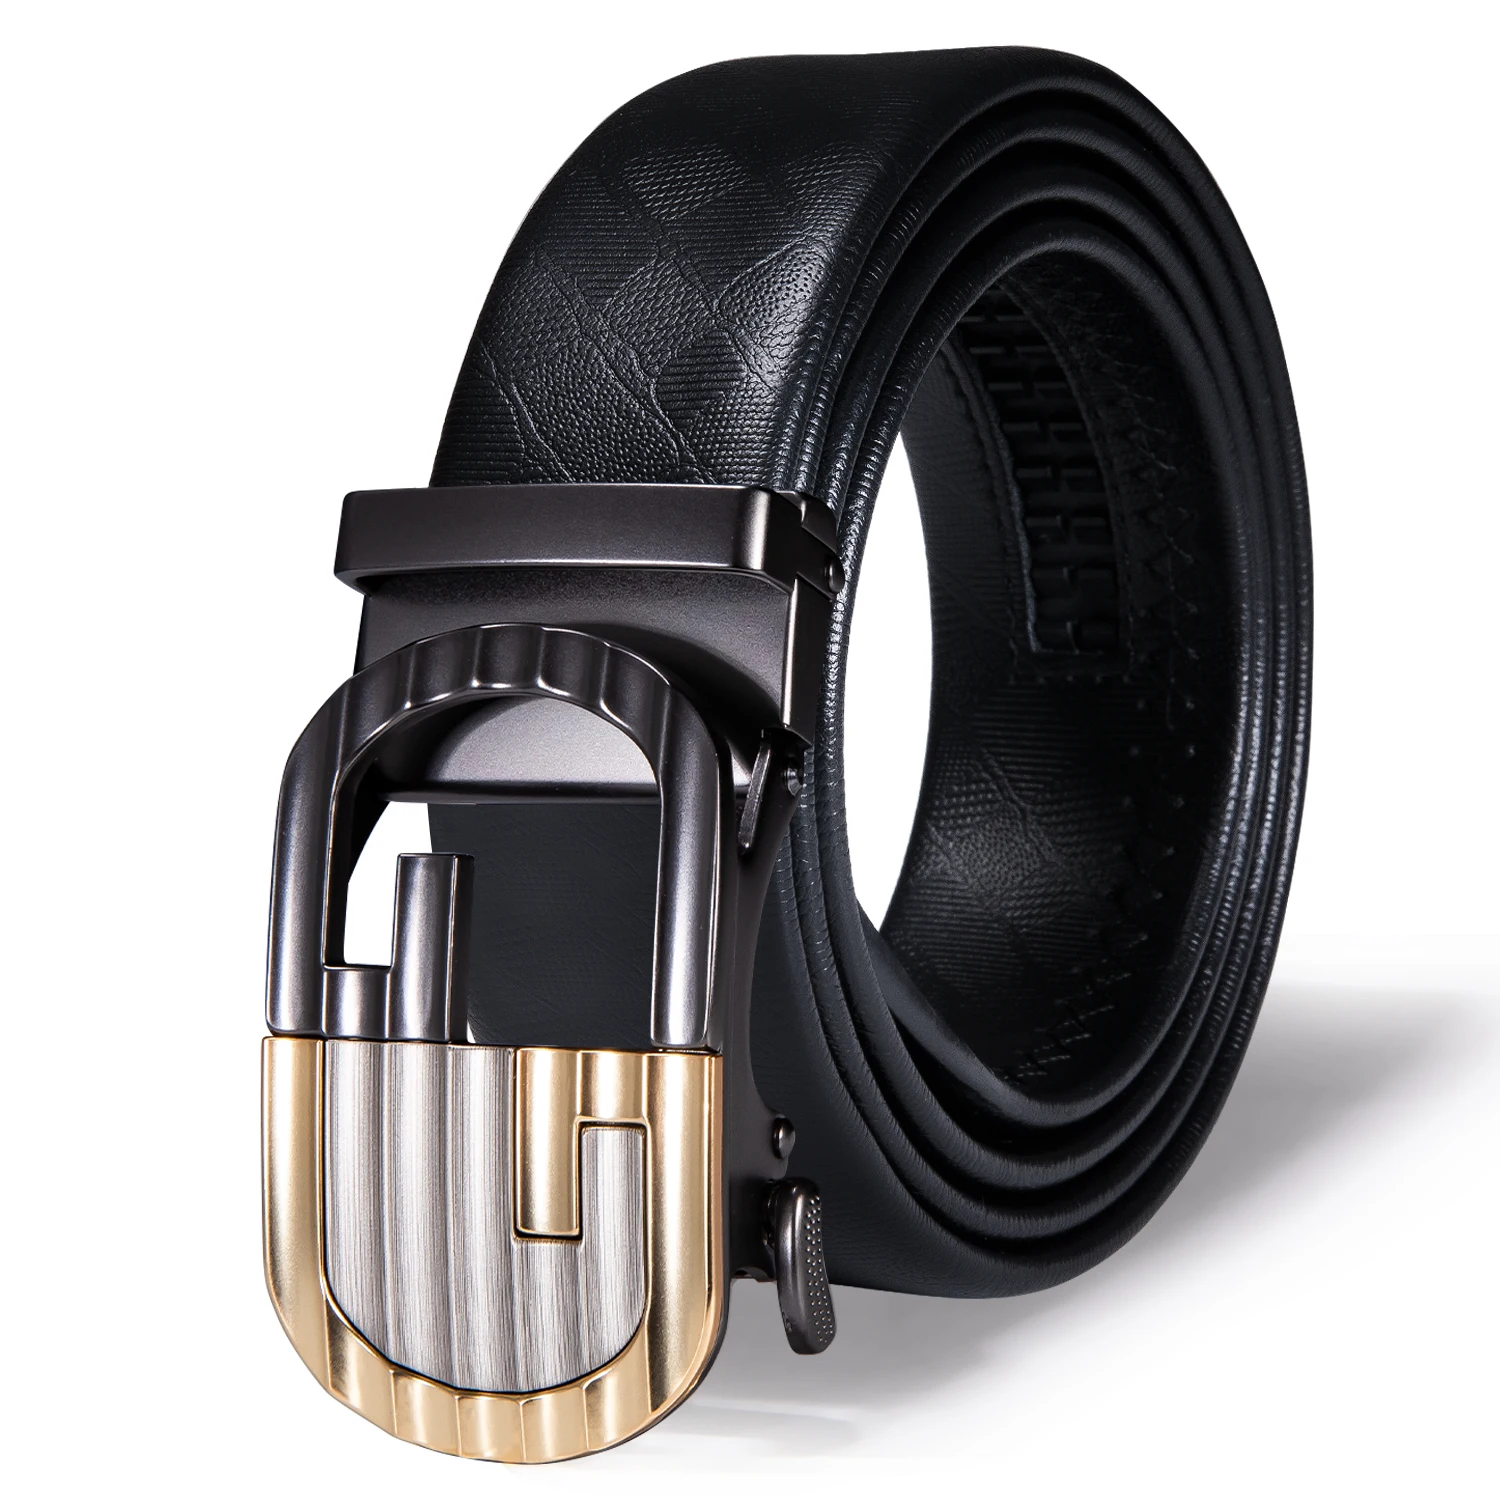 Barry.Wang Design Letters Automatic Belt For Men Black Cowhide Real Leather Belt  Slide Buckle Waist Strap Male Gift 160cm